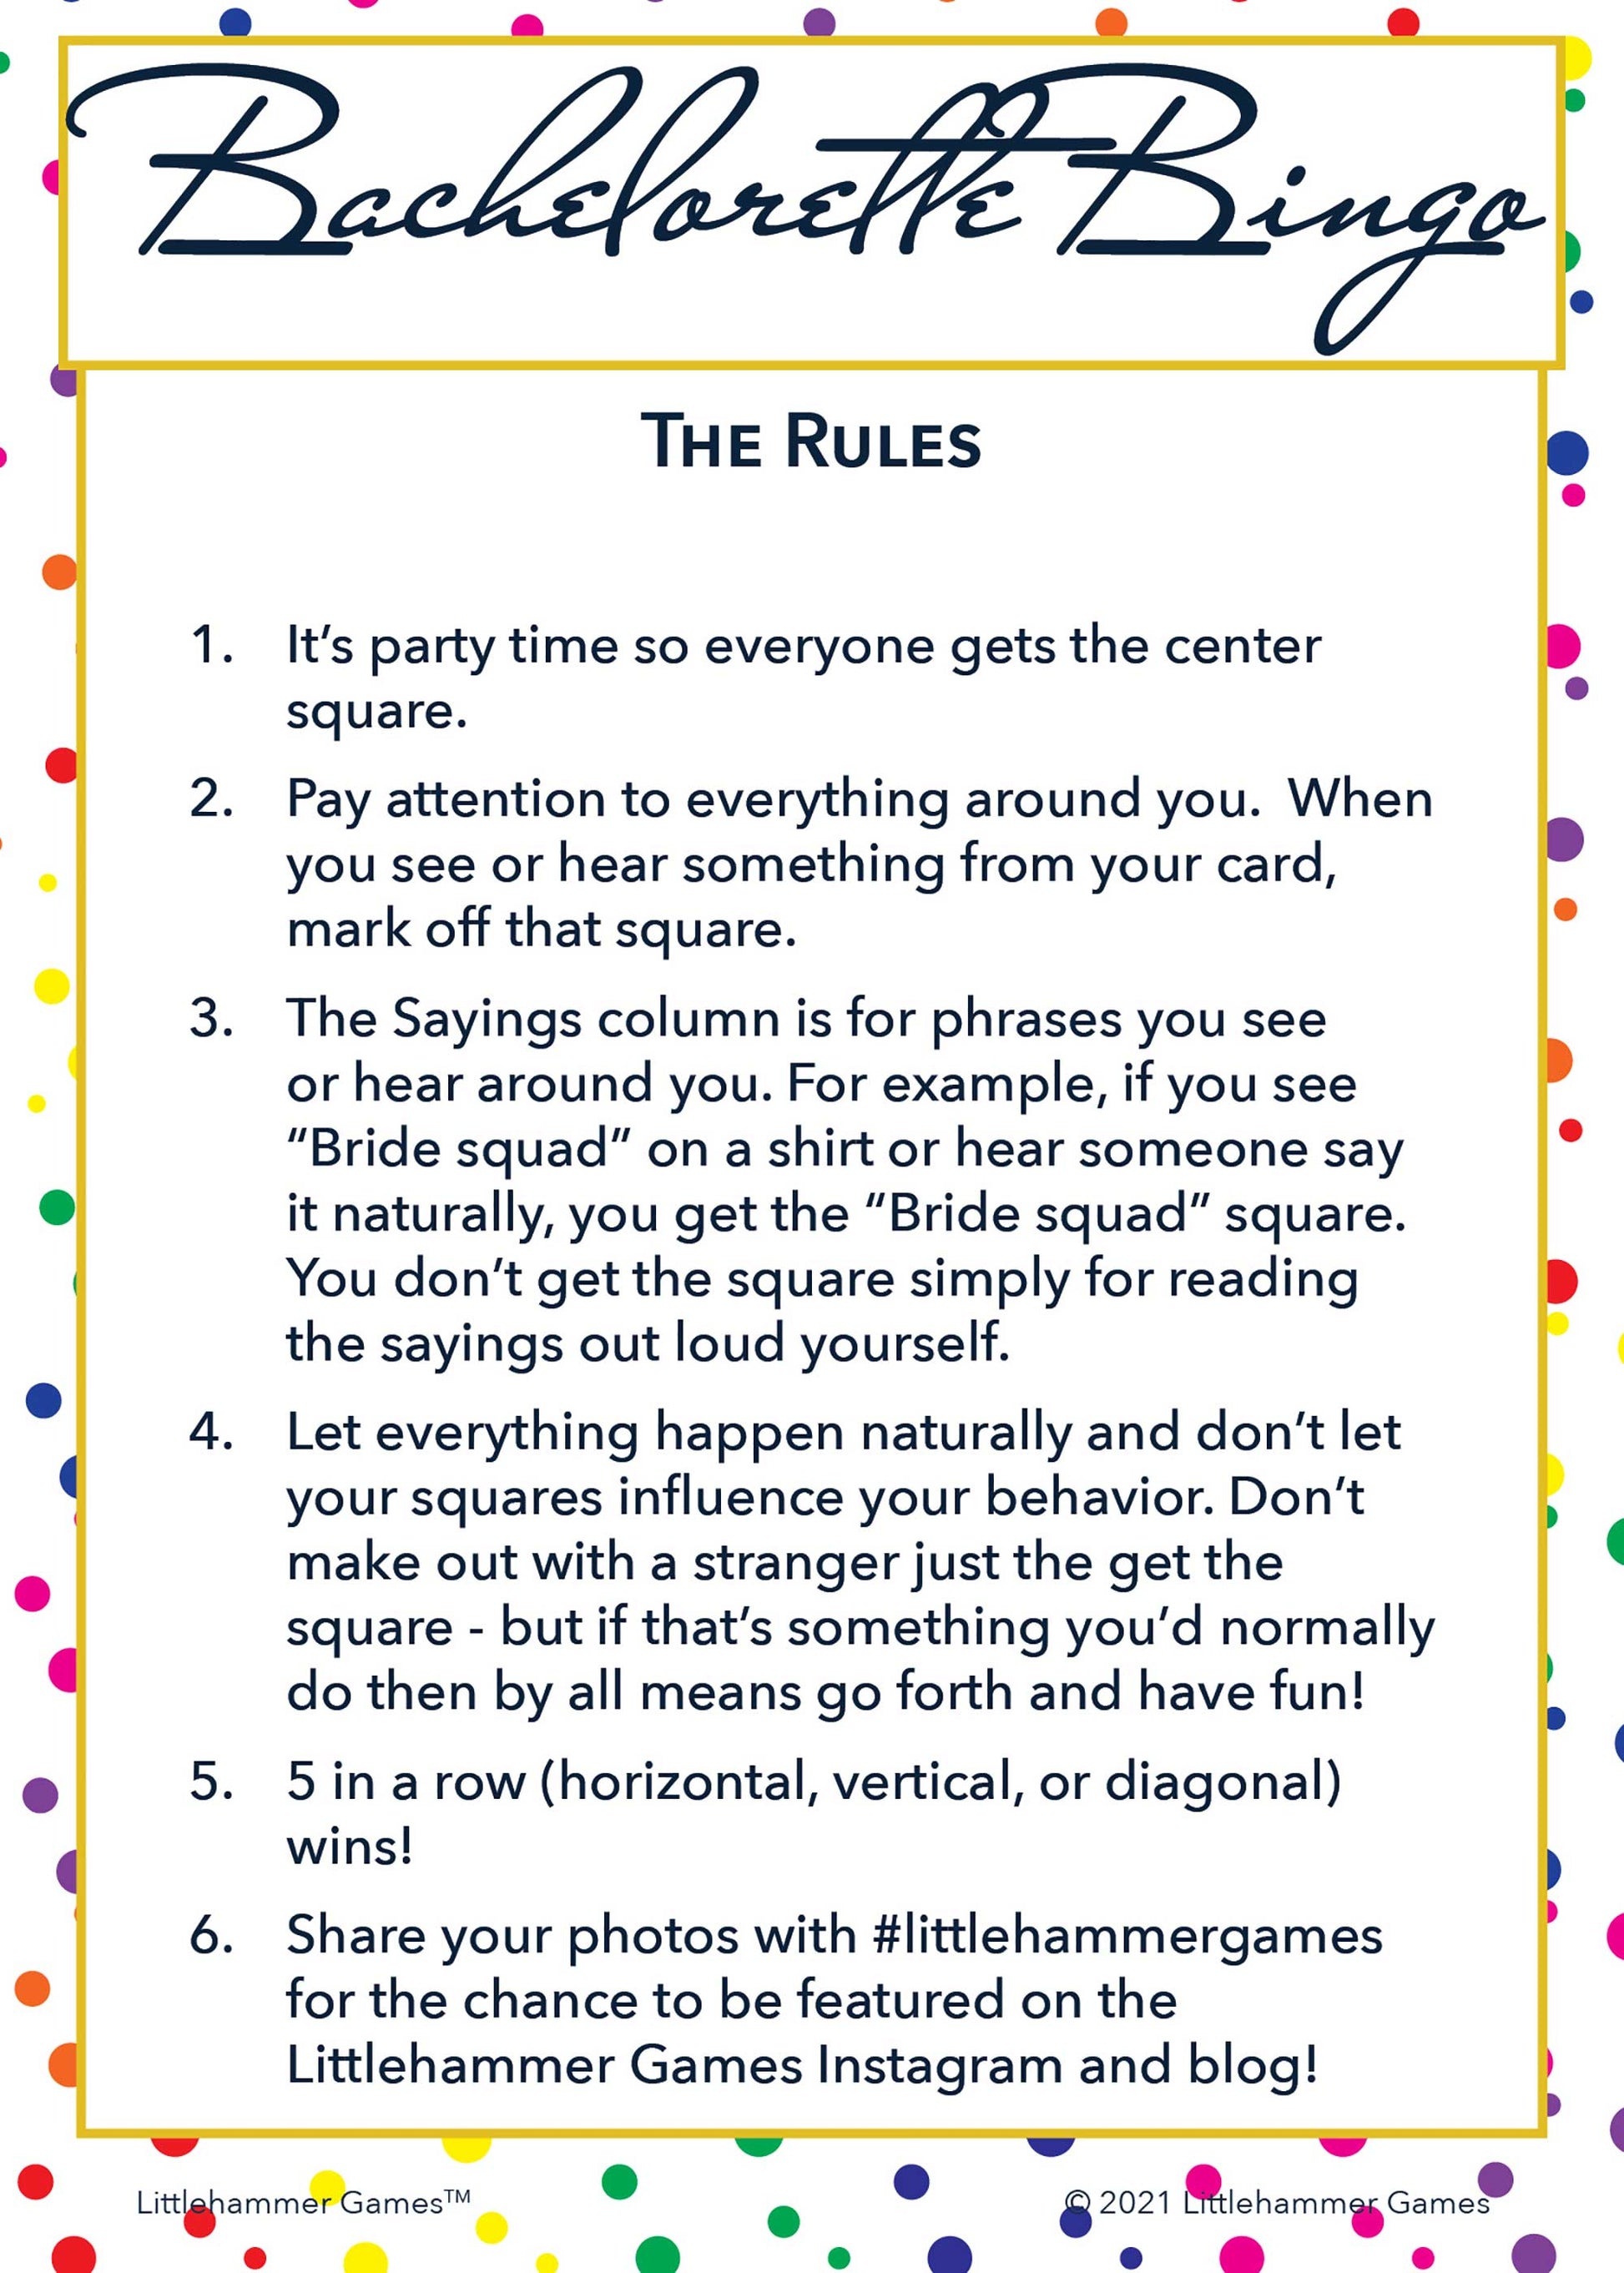 Bachelorette Bingo rules card with a rainbow polka dot background